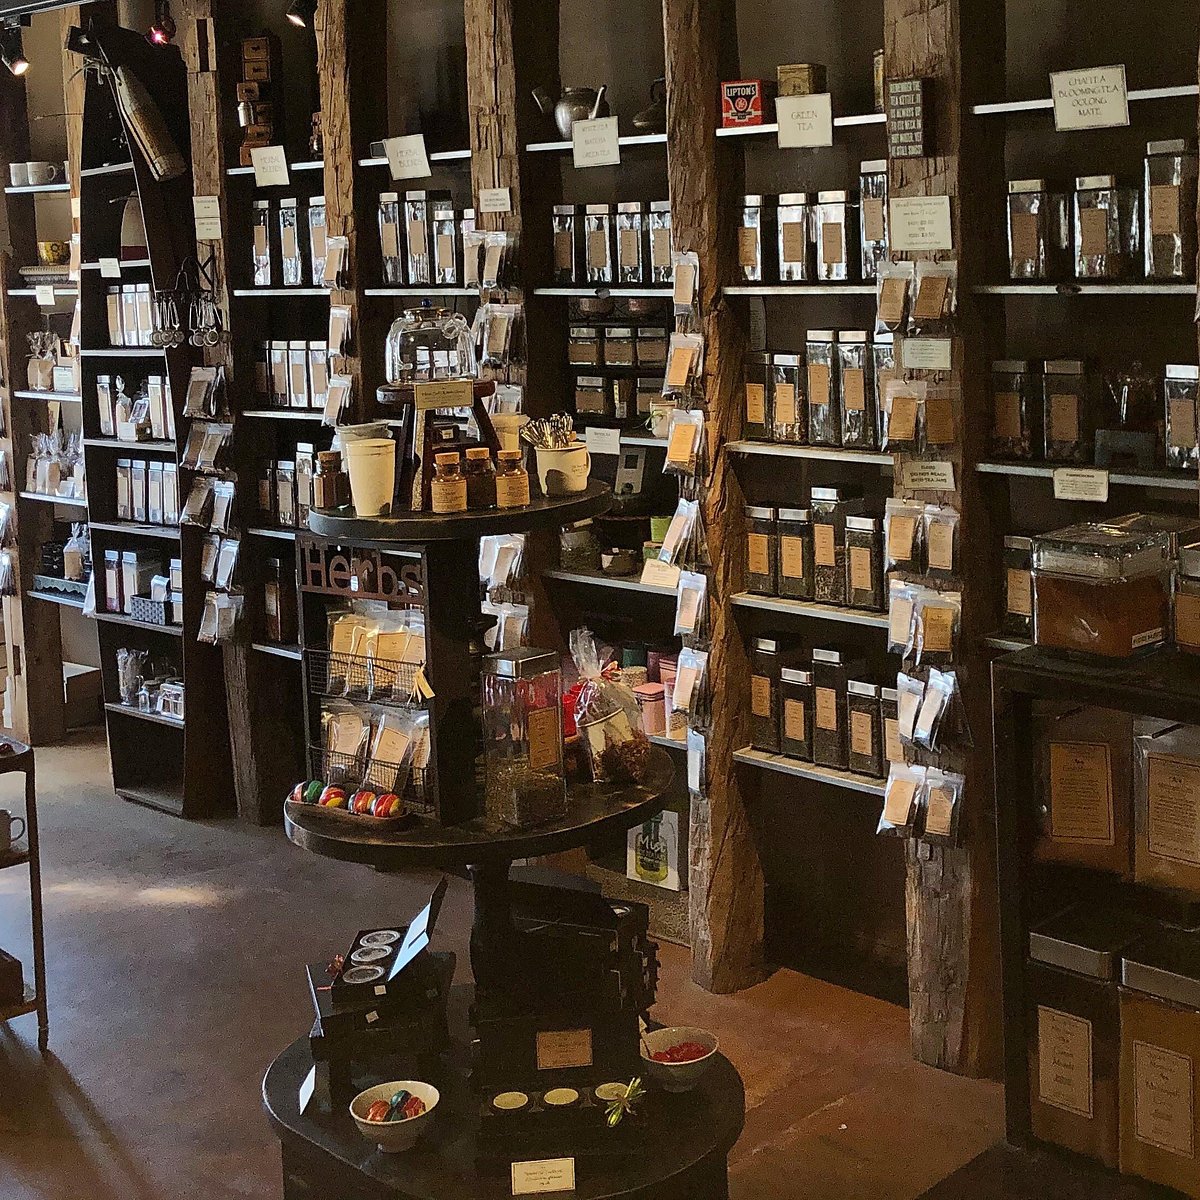 Whisks – TEMECULA Old Town Spice & Tea Merchants